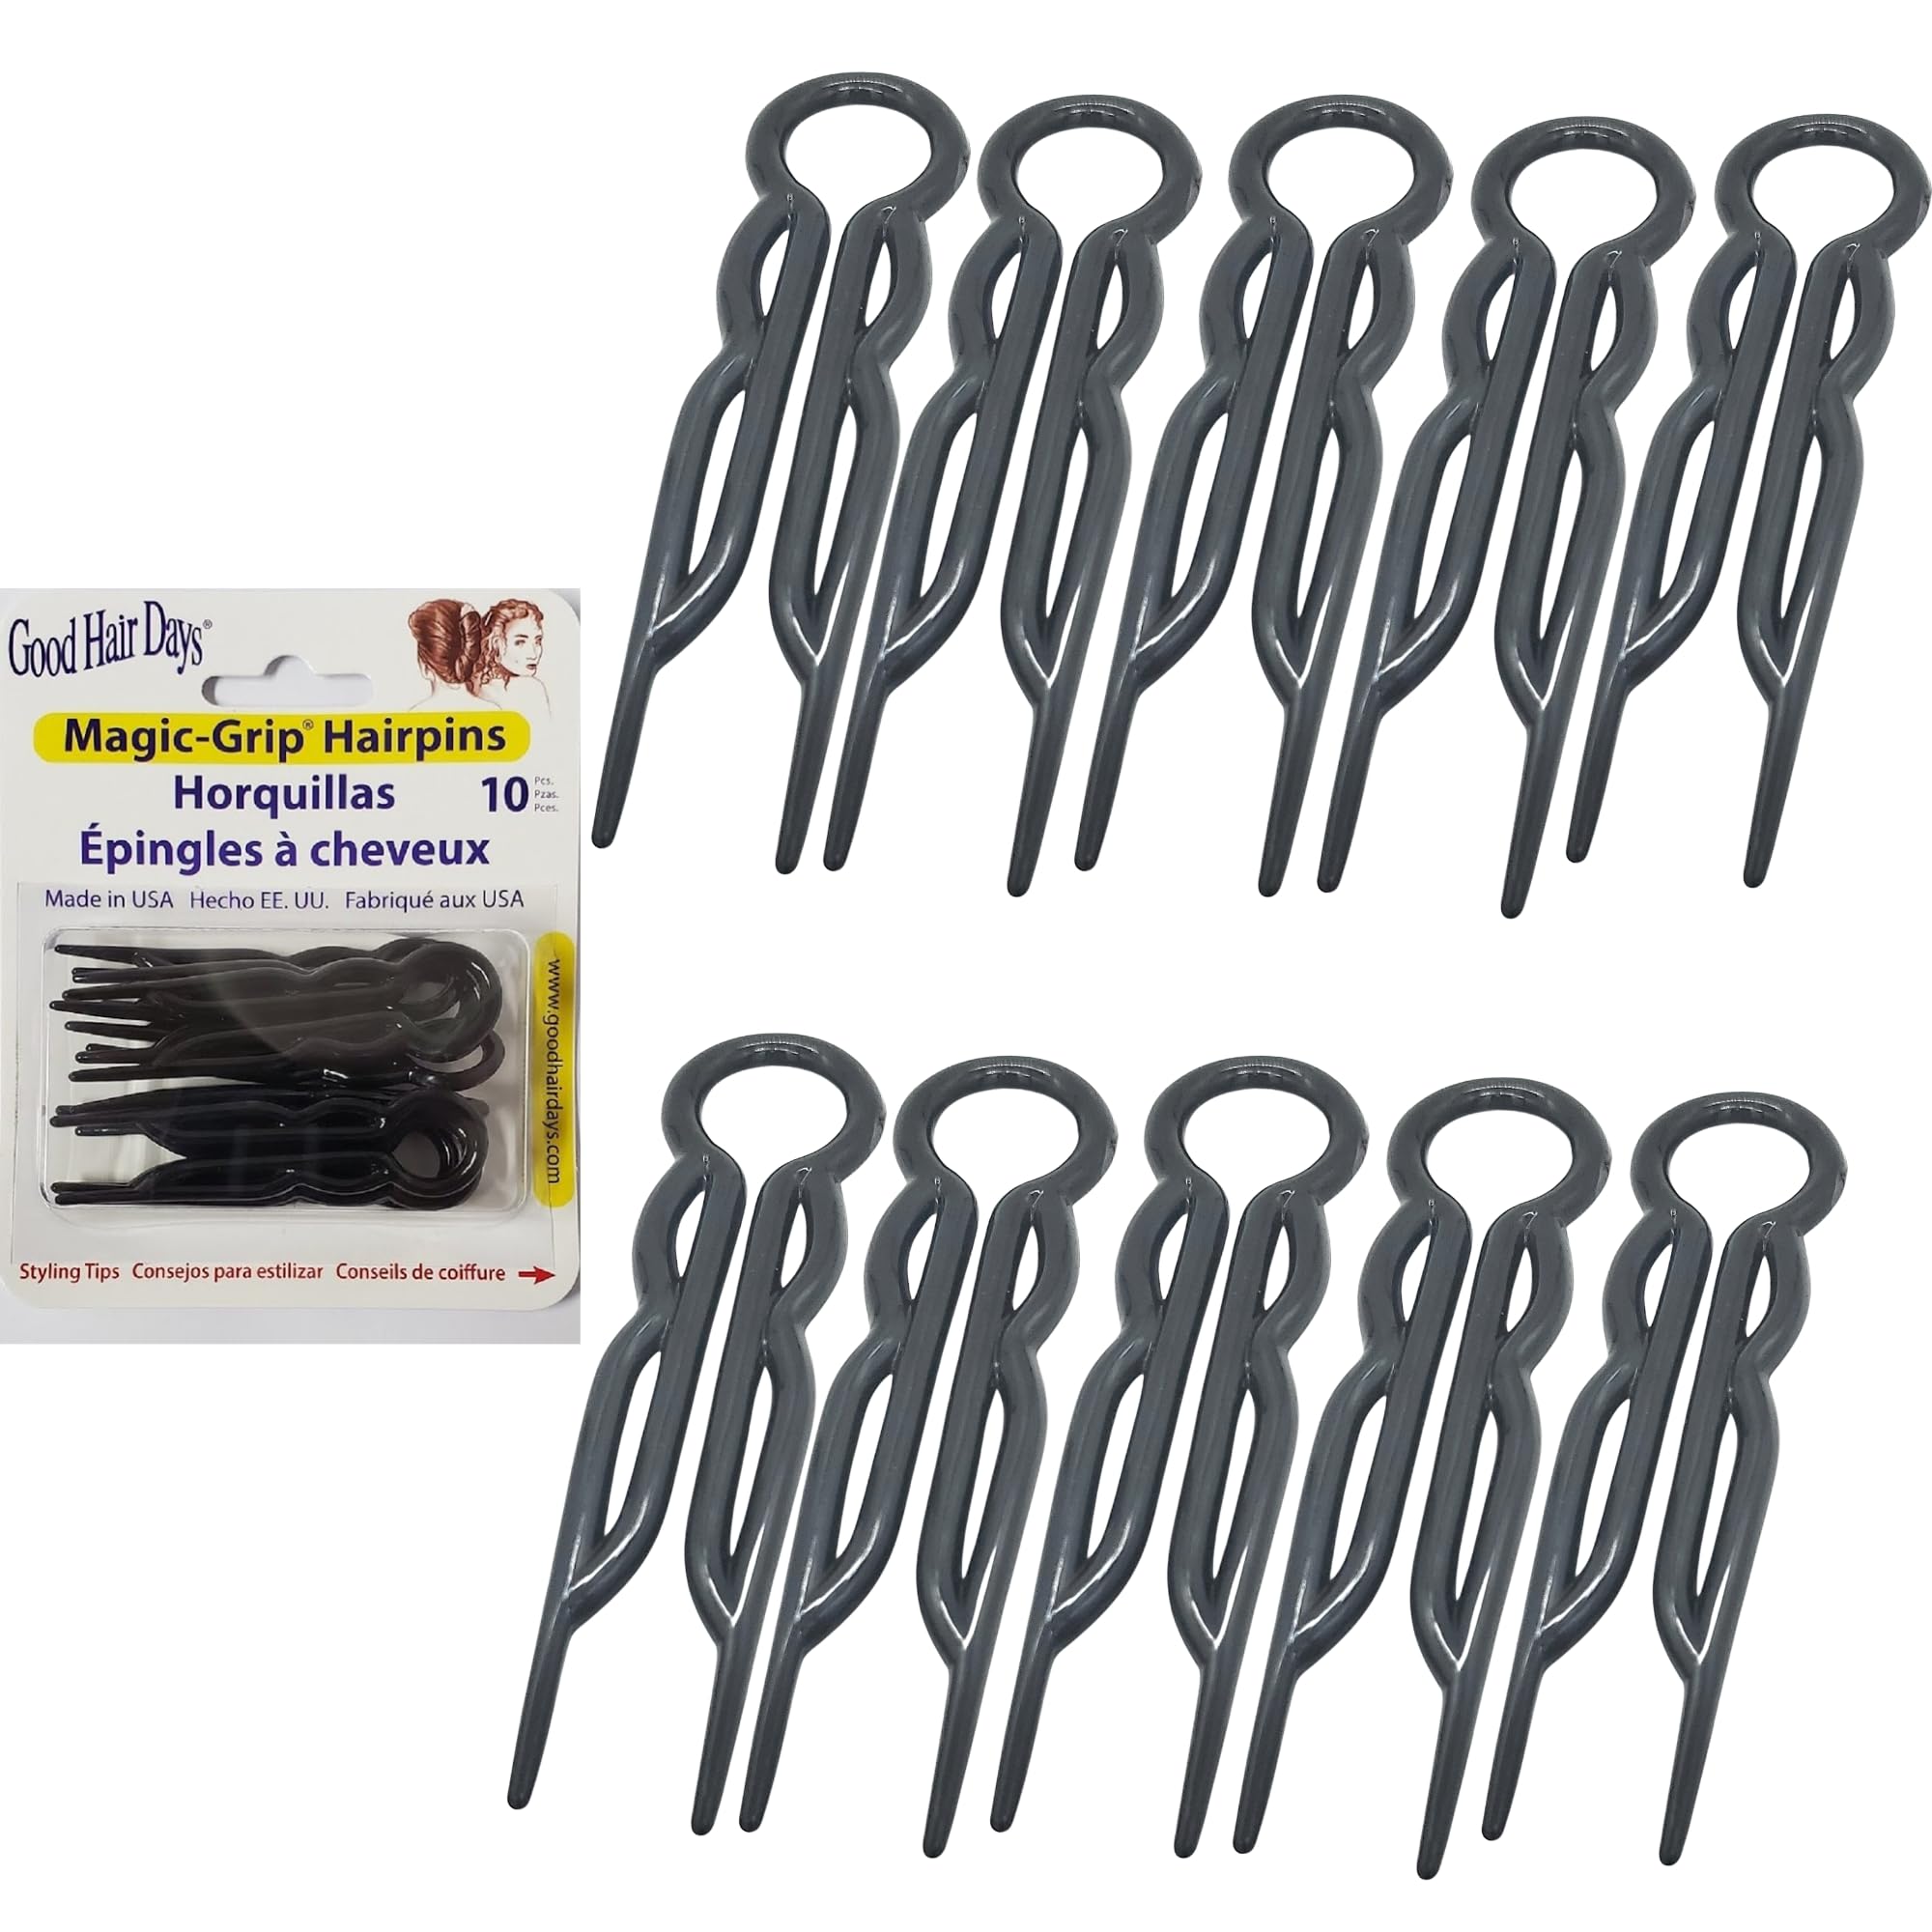 Good Hair Days Hair Pins - Plastic, U-shaped Magic Grip Hairpins, Strong Durable Pins For Fine, Thick & Long Hair, Hair Styling Accessories, Set of 10 (Black)